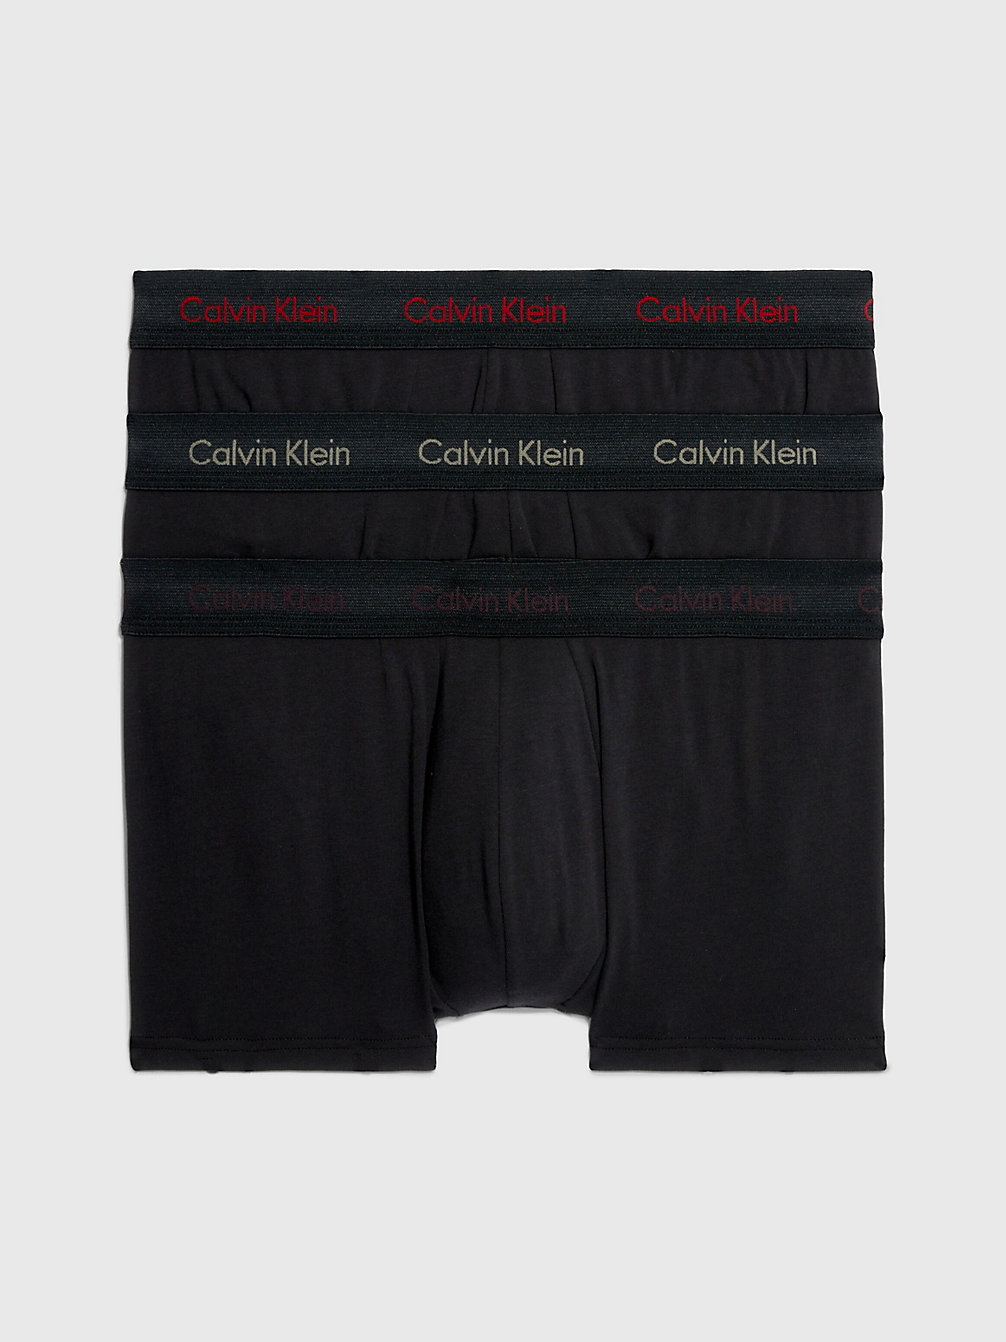 B-PWR PLM, FUSC BRY, ELEMENT HTR LG 3-Pack Heupboxers - Cotton Stretch undefined heren Calvin Klein